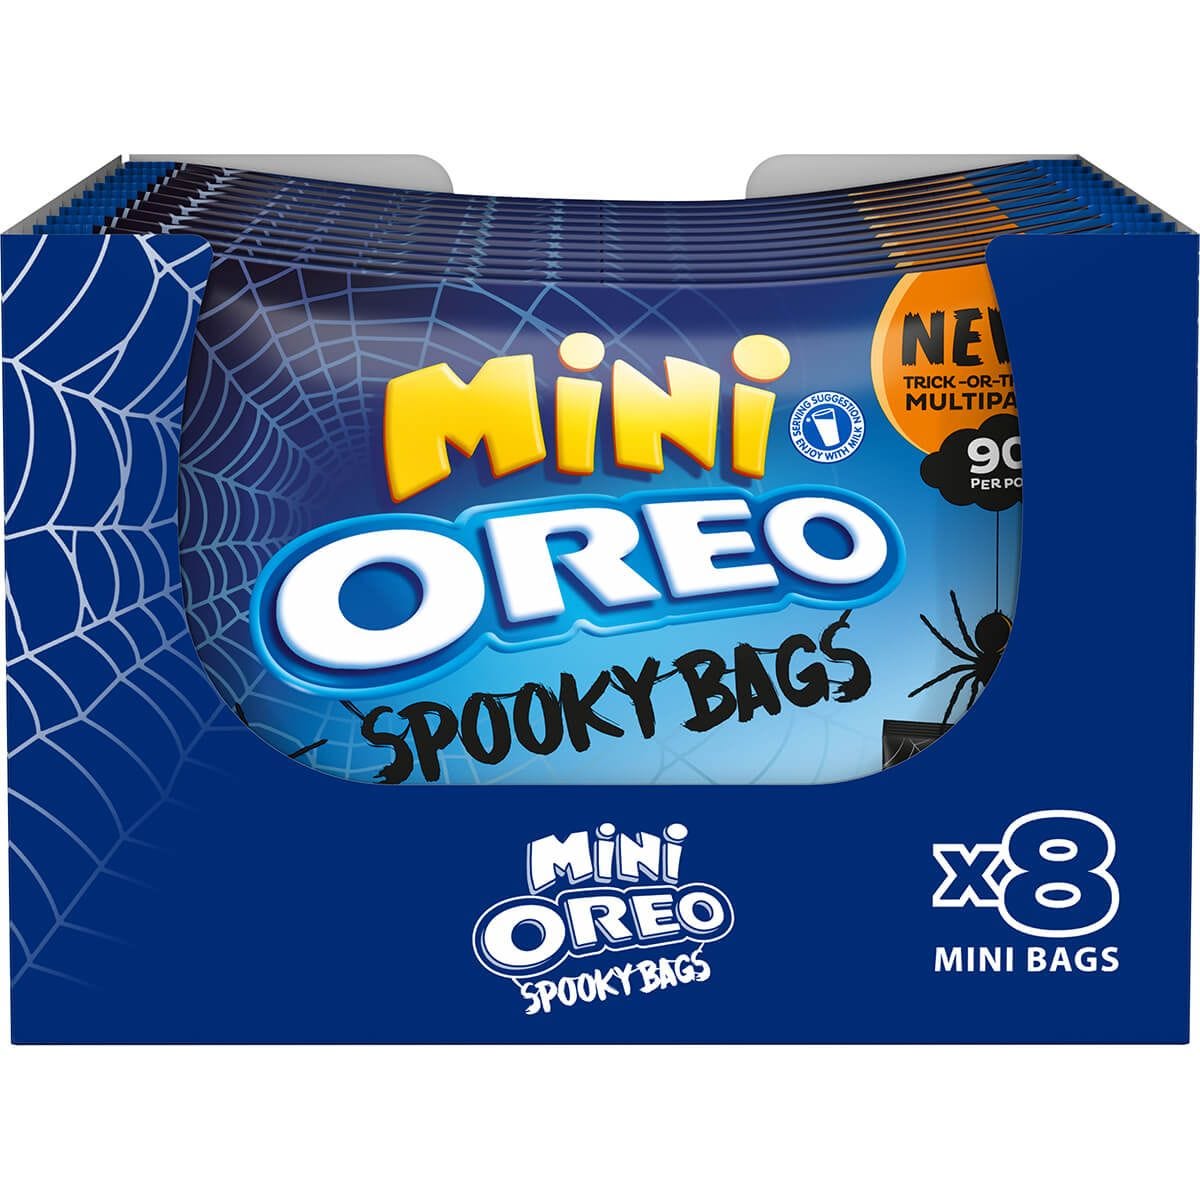 Mini Oreo Spooky Bags Box of 10 bags